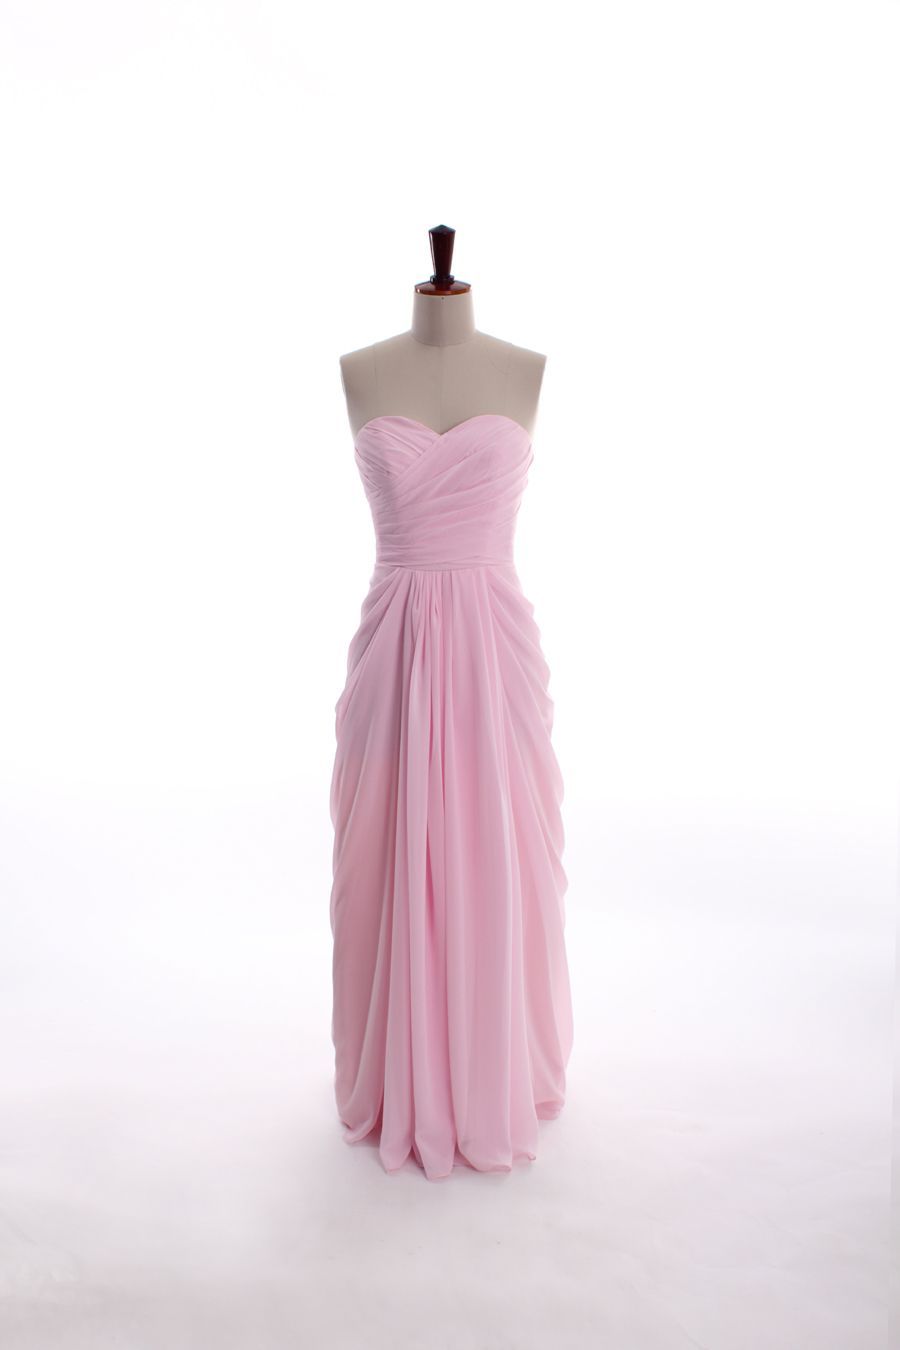 sweetheart neckline chiffon dress (in floor-length) bridesmaid dress?!